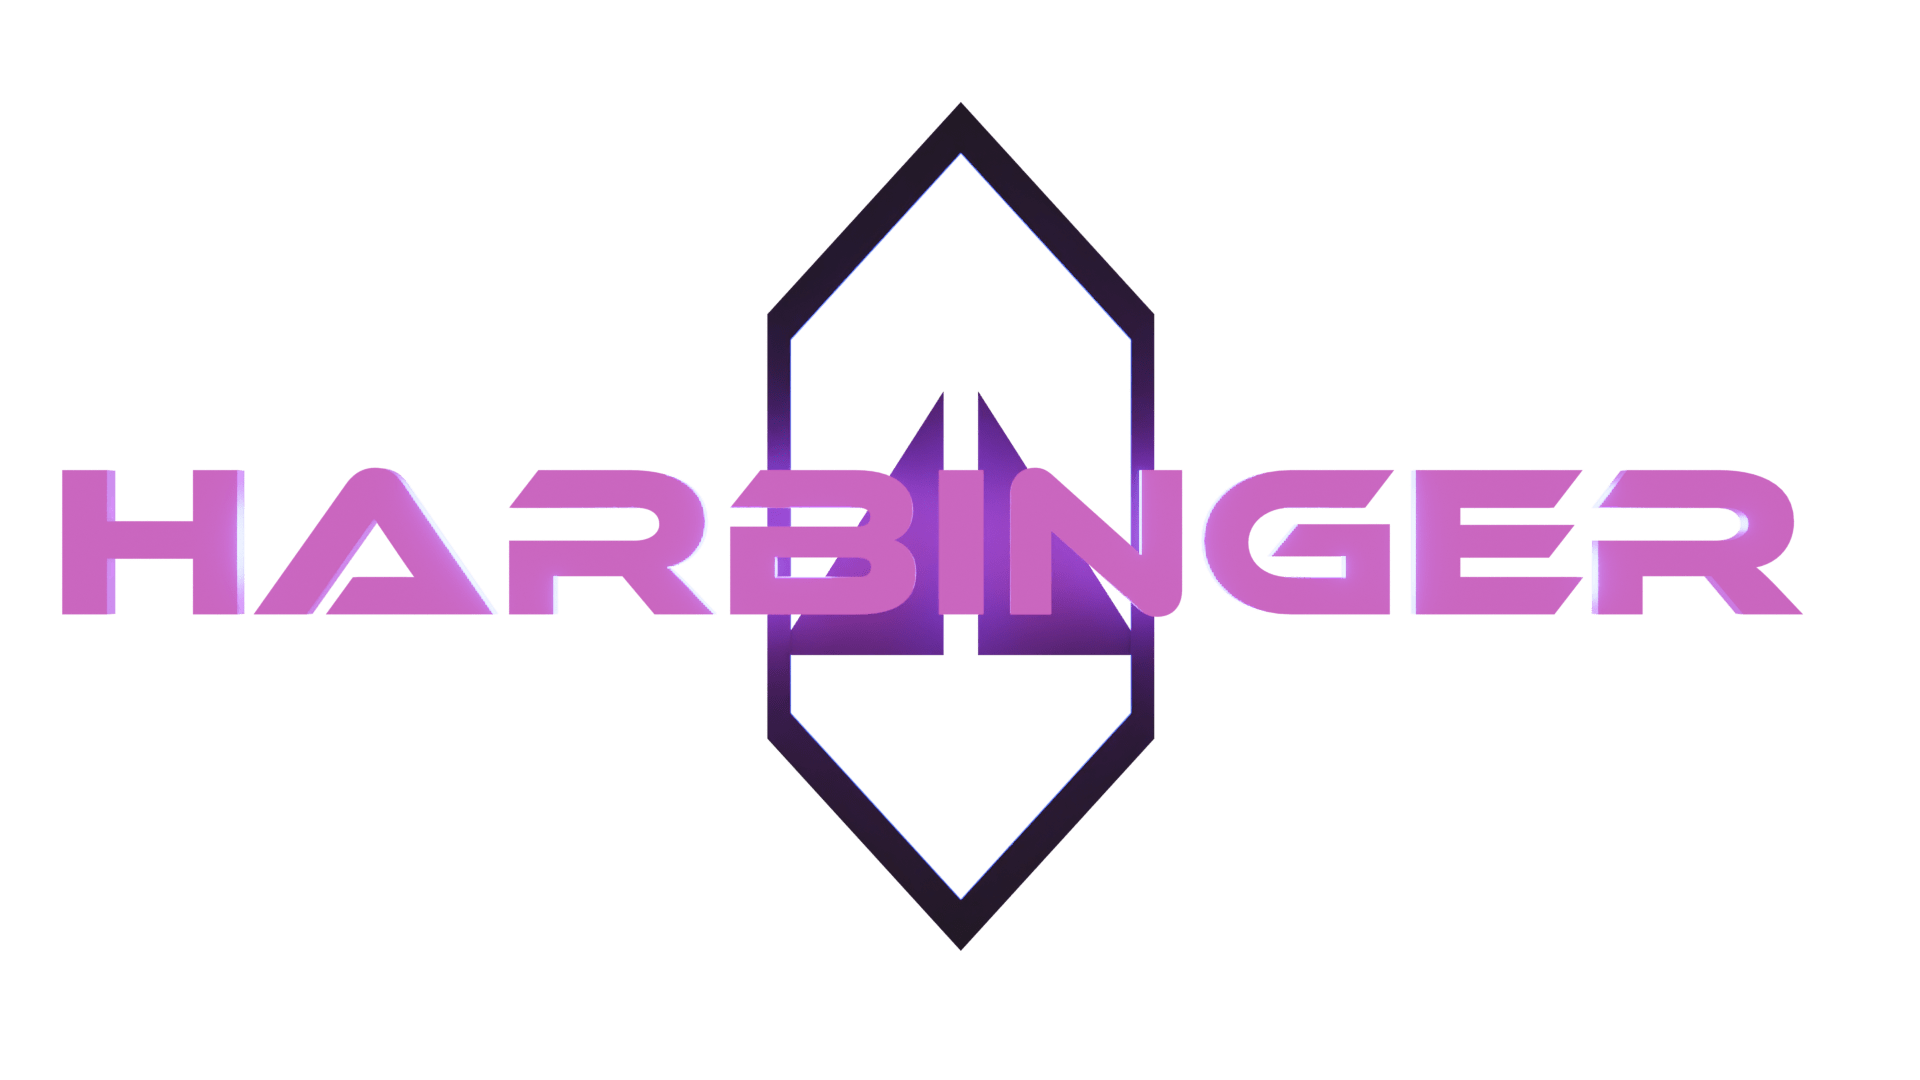 Project Harbinger